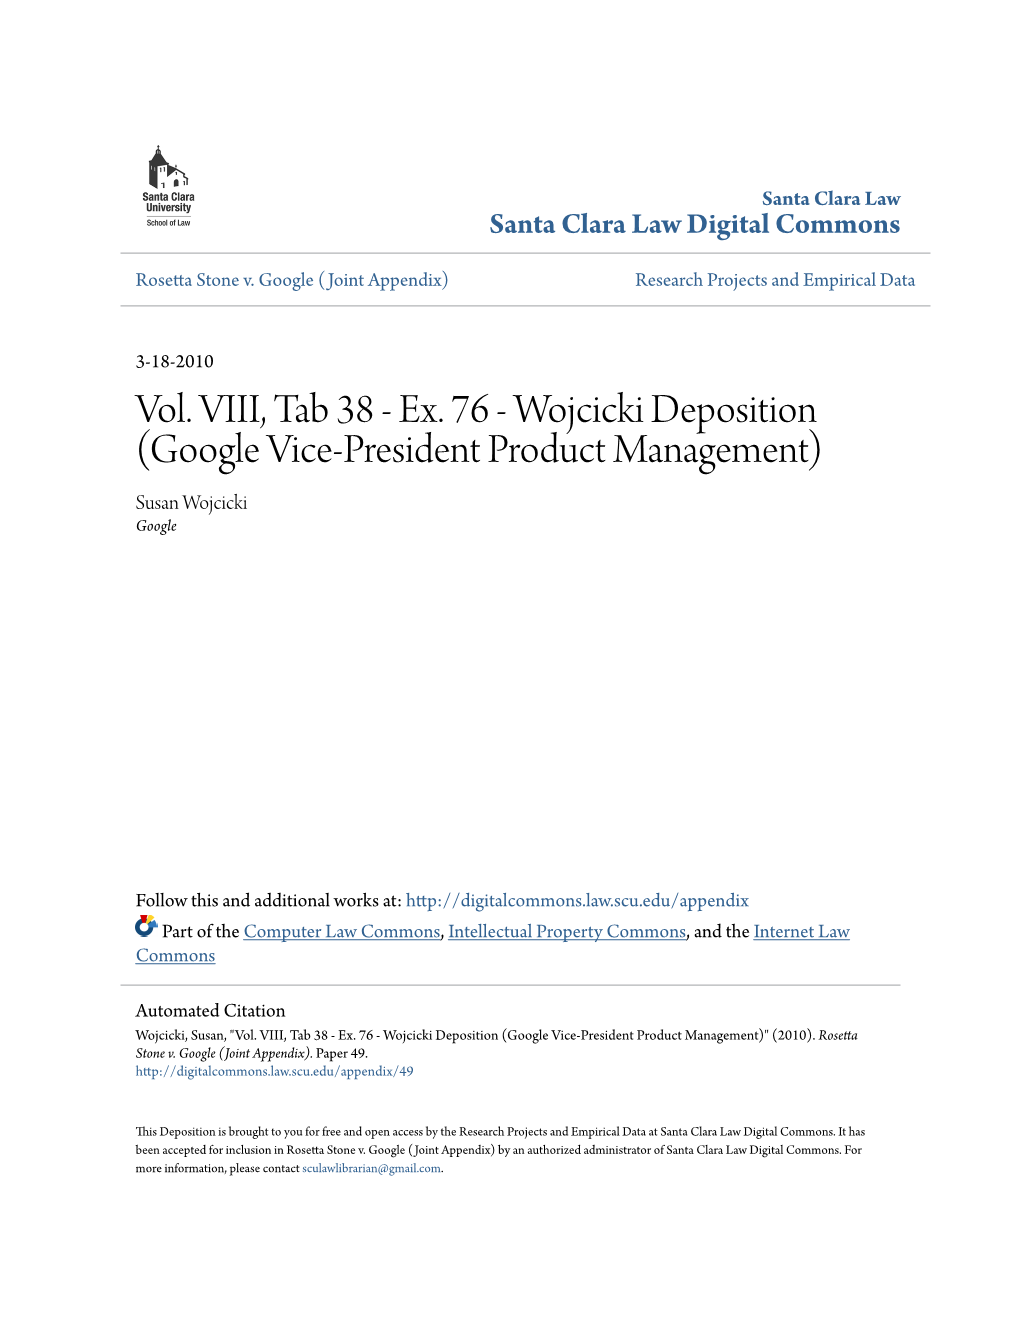 Wojcicki Deposition (Google Vice-President Product Management) Susan Wojcicki Google